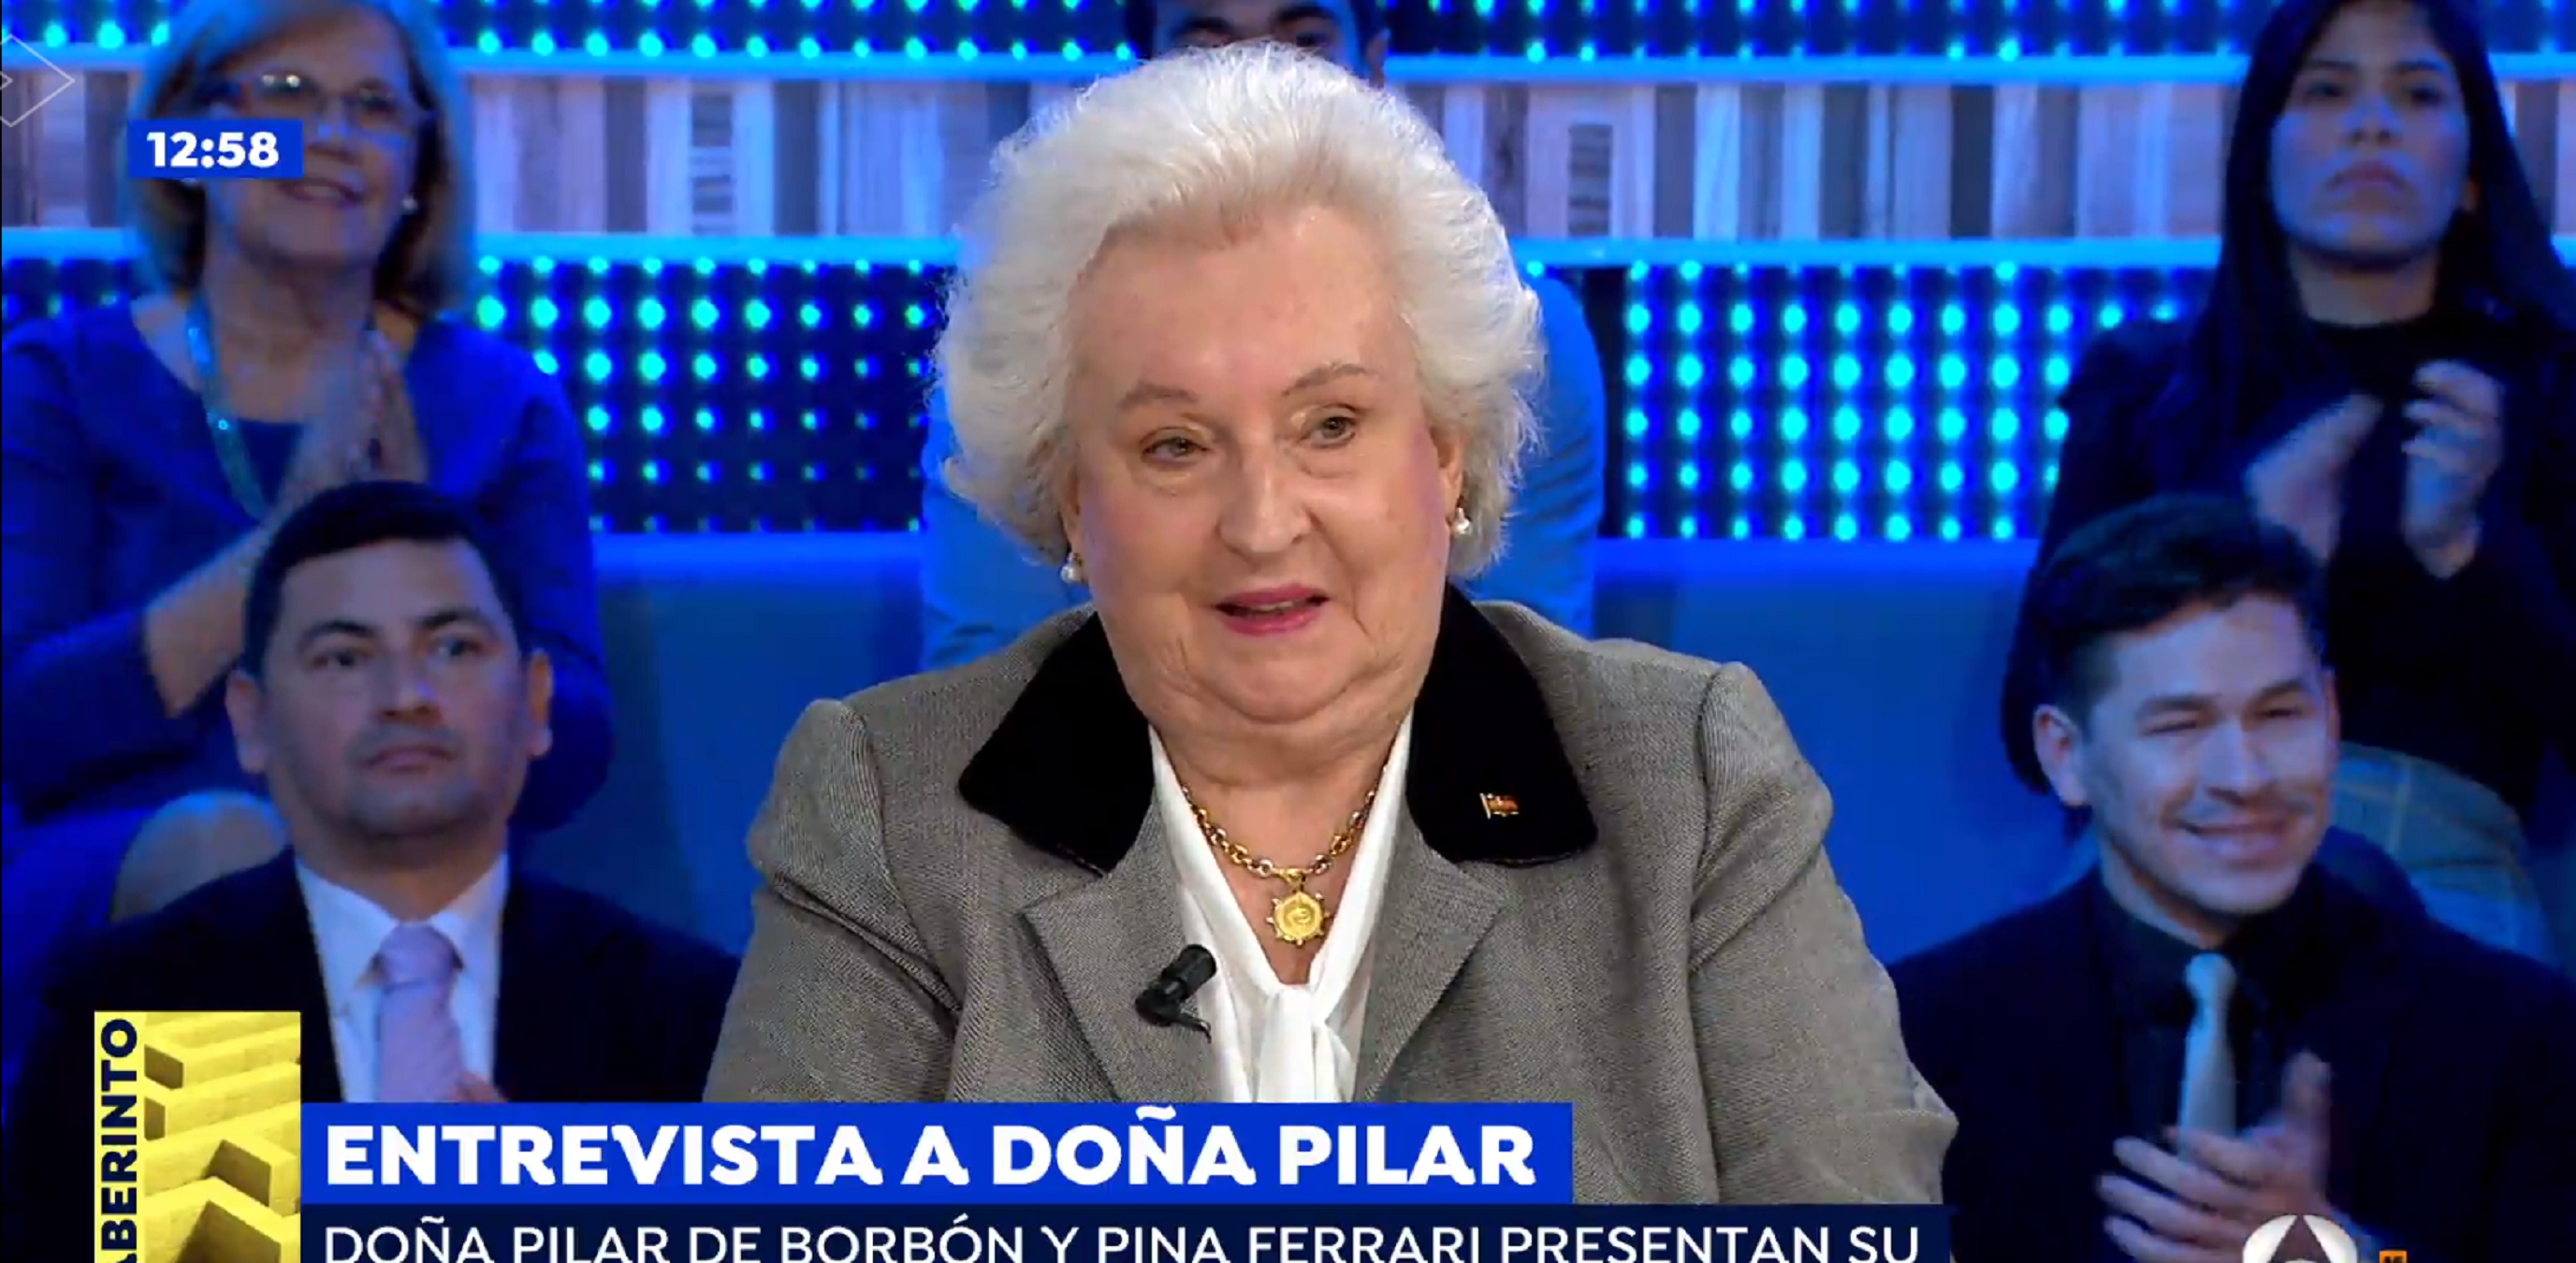 Pilar de Borbó parla del divorci a TV: "Con Cristina ya no hablamos del marido"